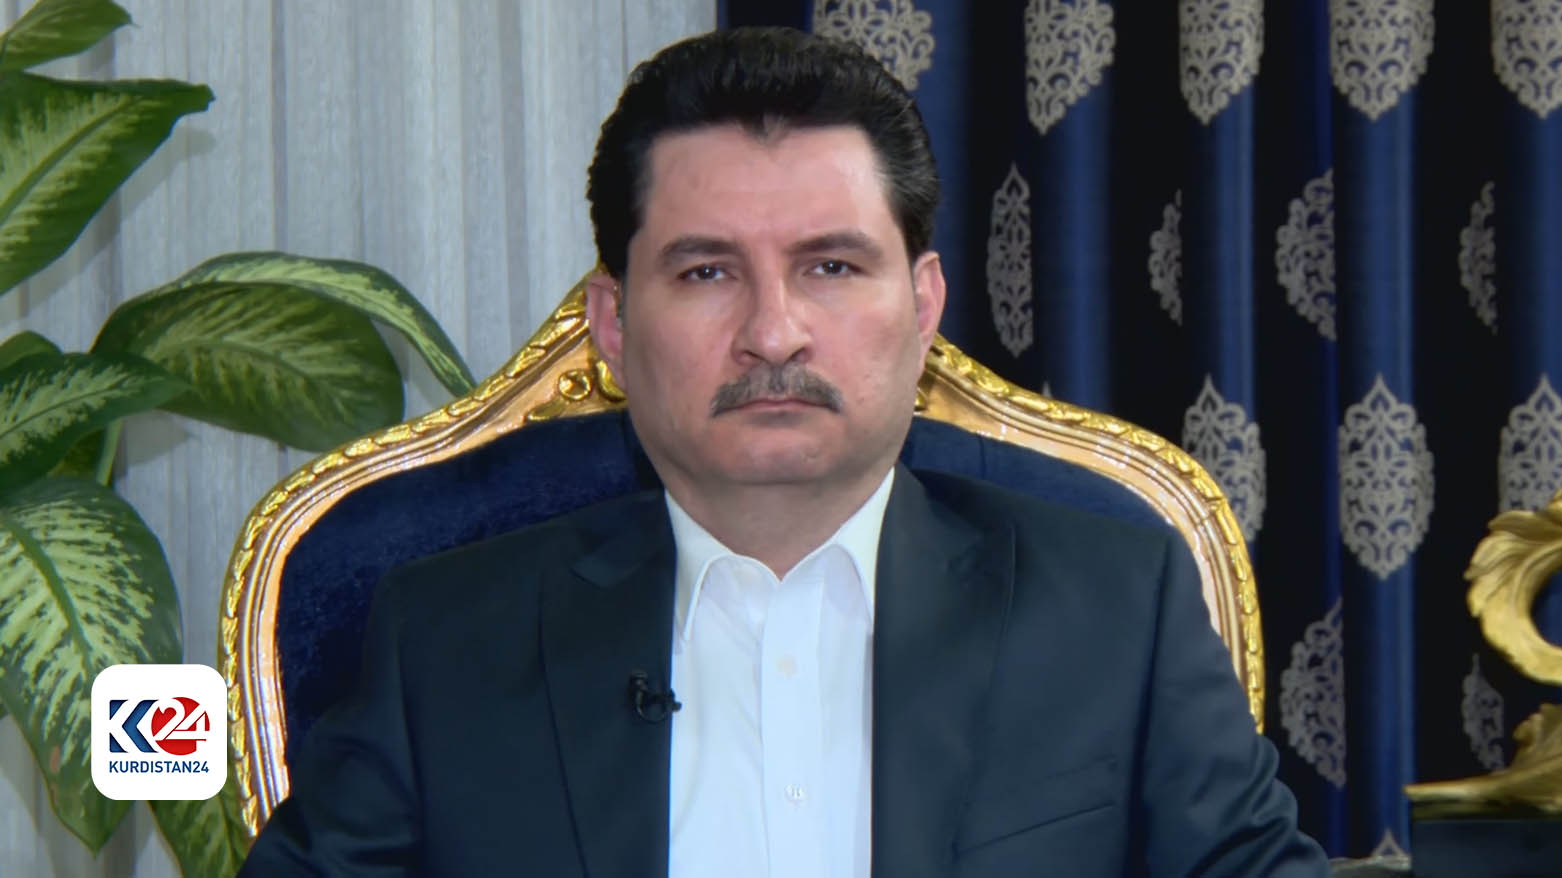 Shakhawan Abdulla, Deputy Speaker of the Iraqi Parliament, in an interview with Kurdistan24. (Photo: Kurdistan 24)